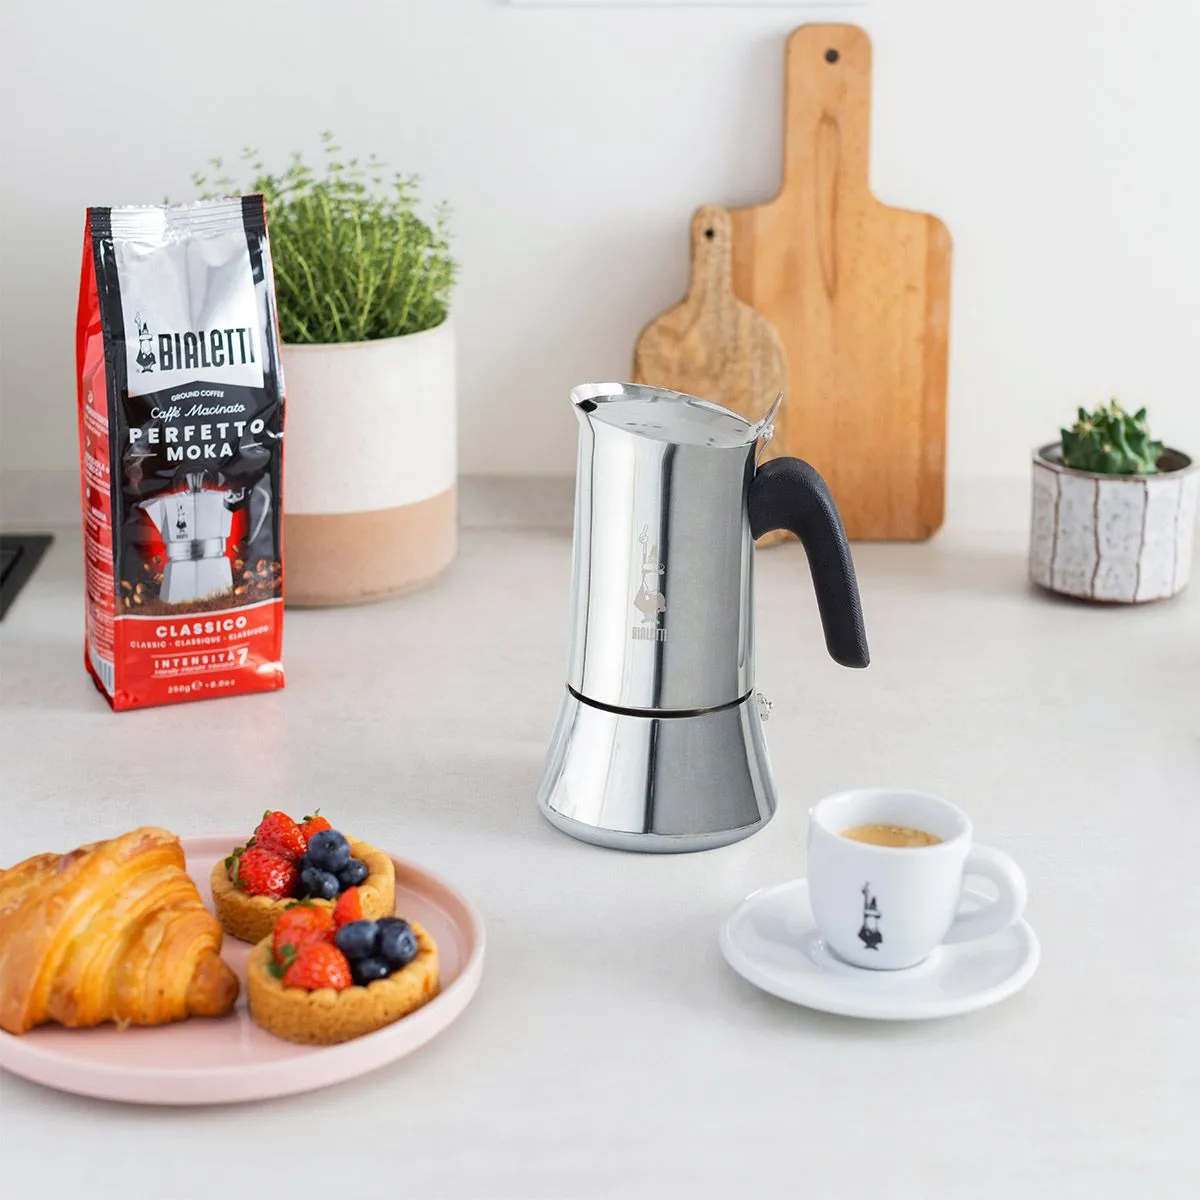 How To Use the Bialetti Venus Moka Pot Espresso Coffee 